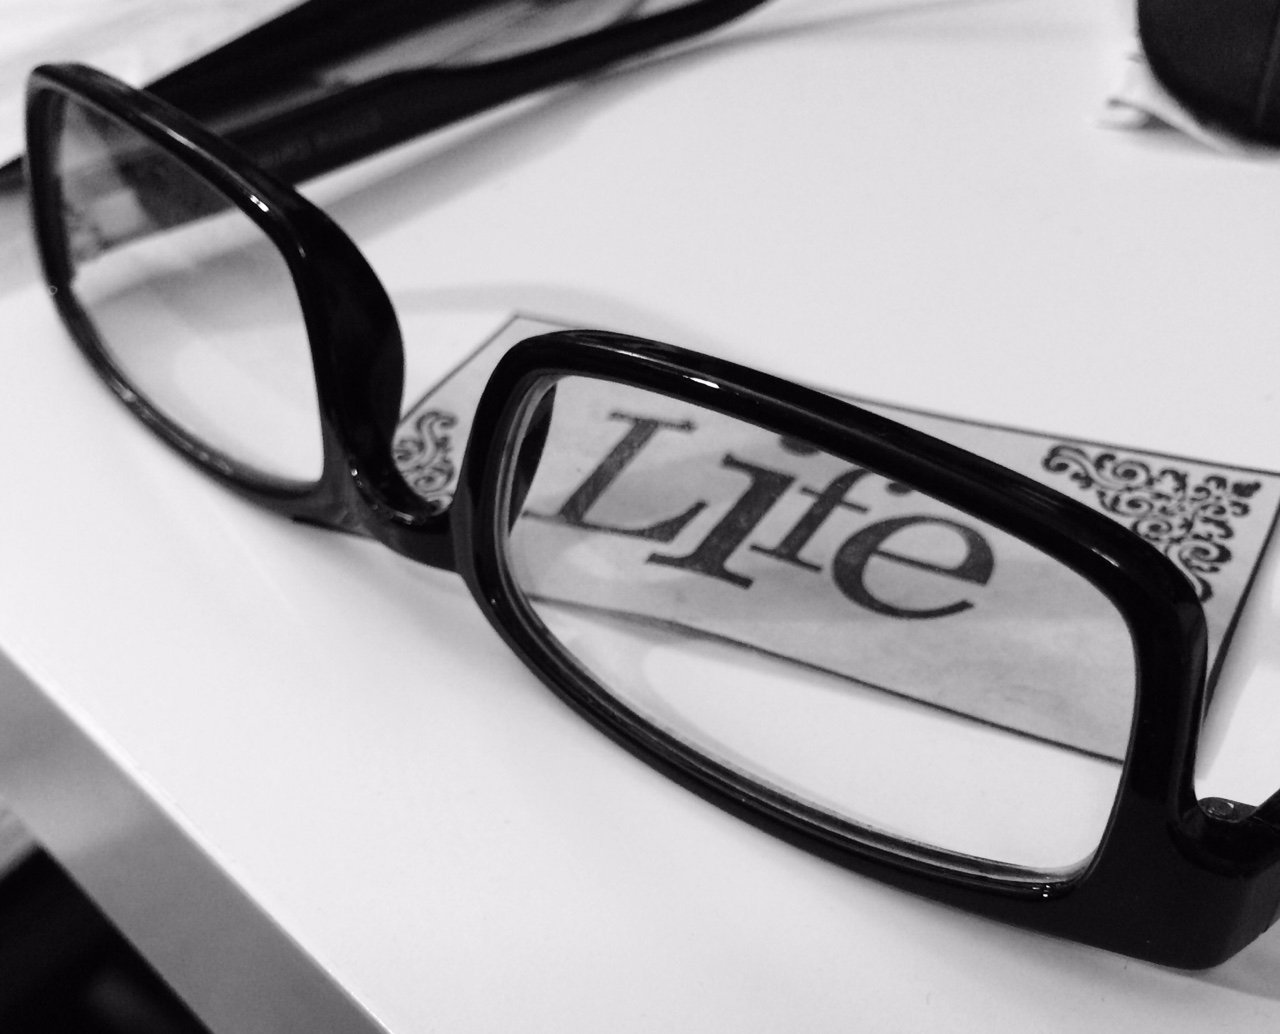 Black frame glasses around the word "Life" - black and white photo 